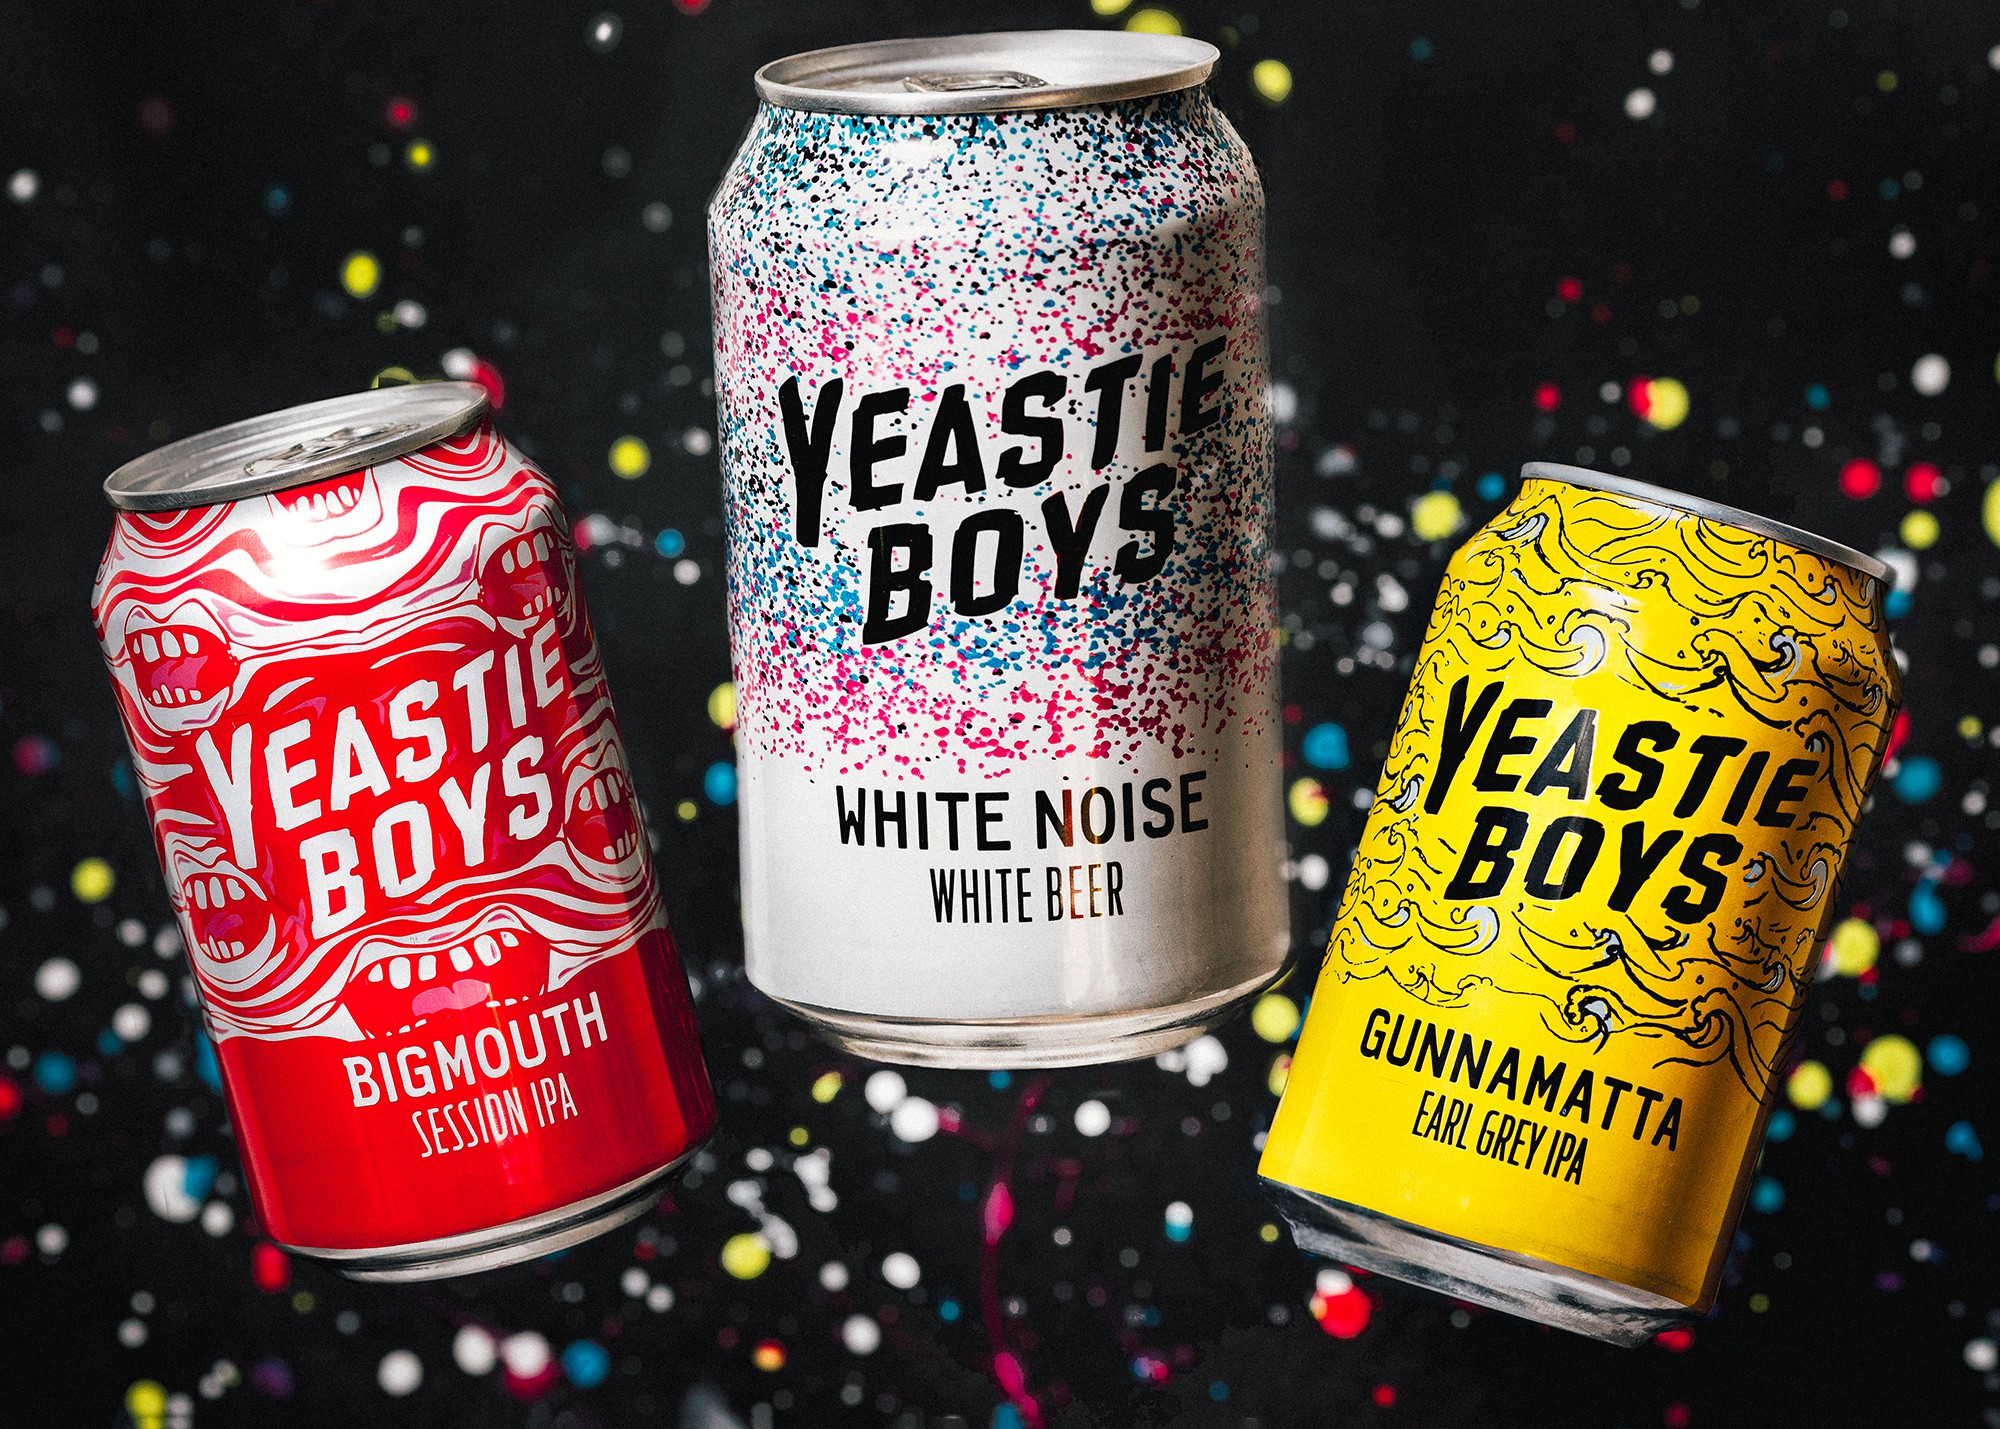 Yeastie Boys Etiquetas de cerveza artesanal
